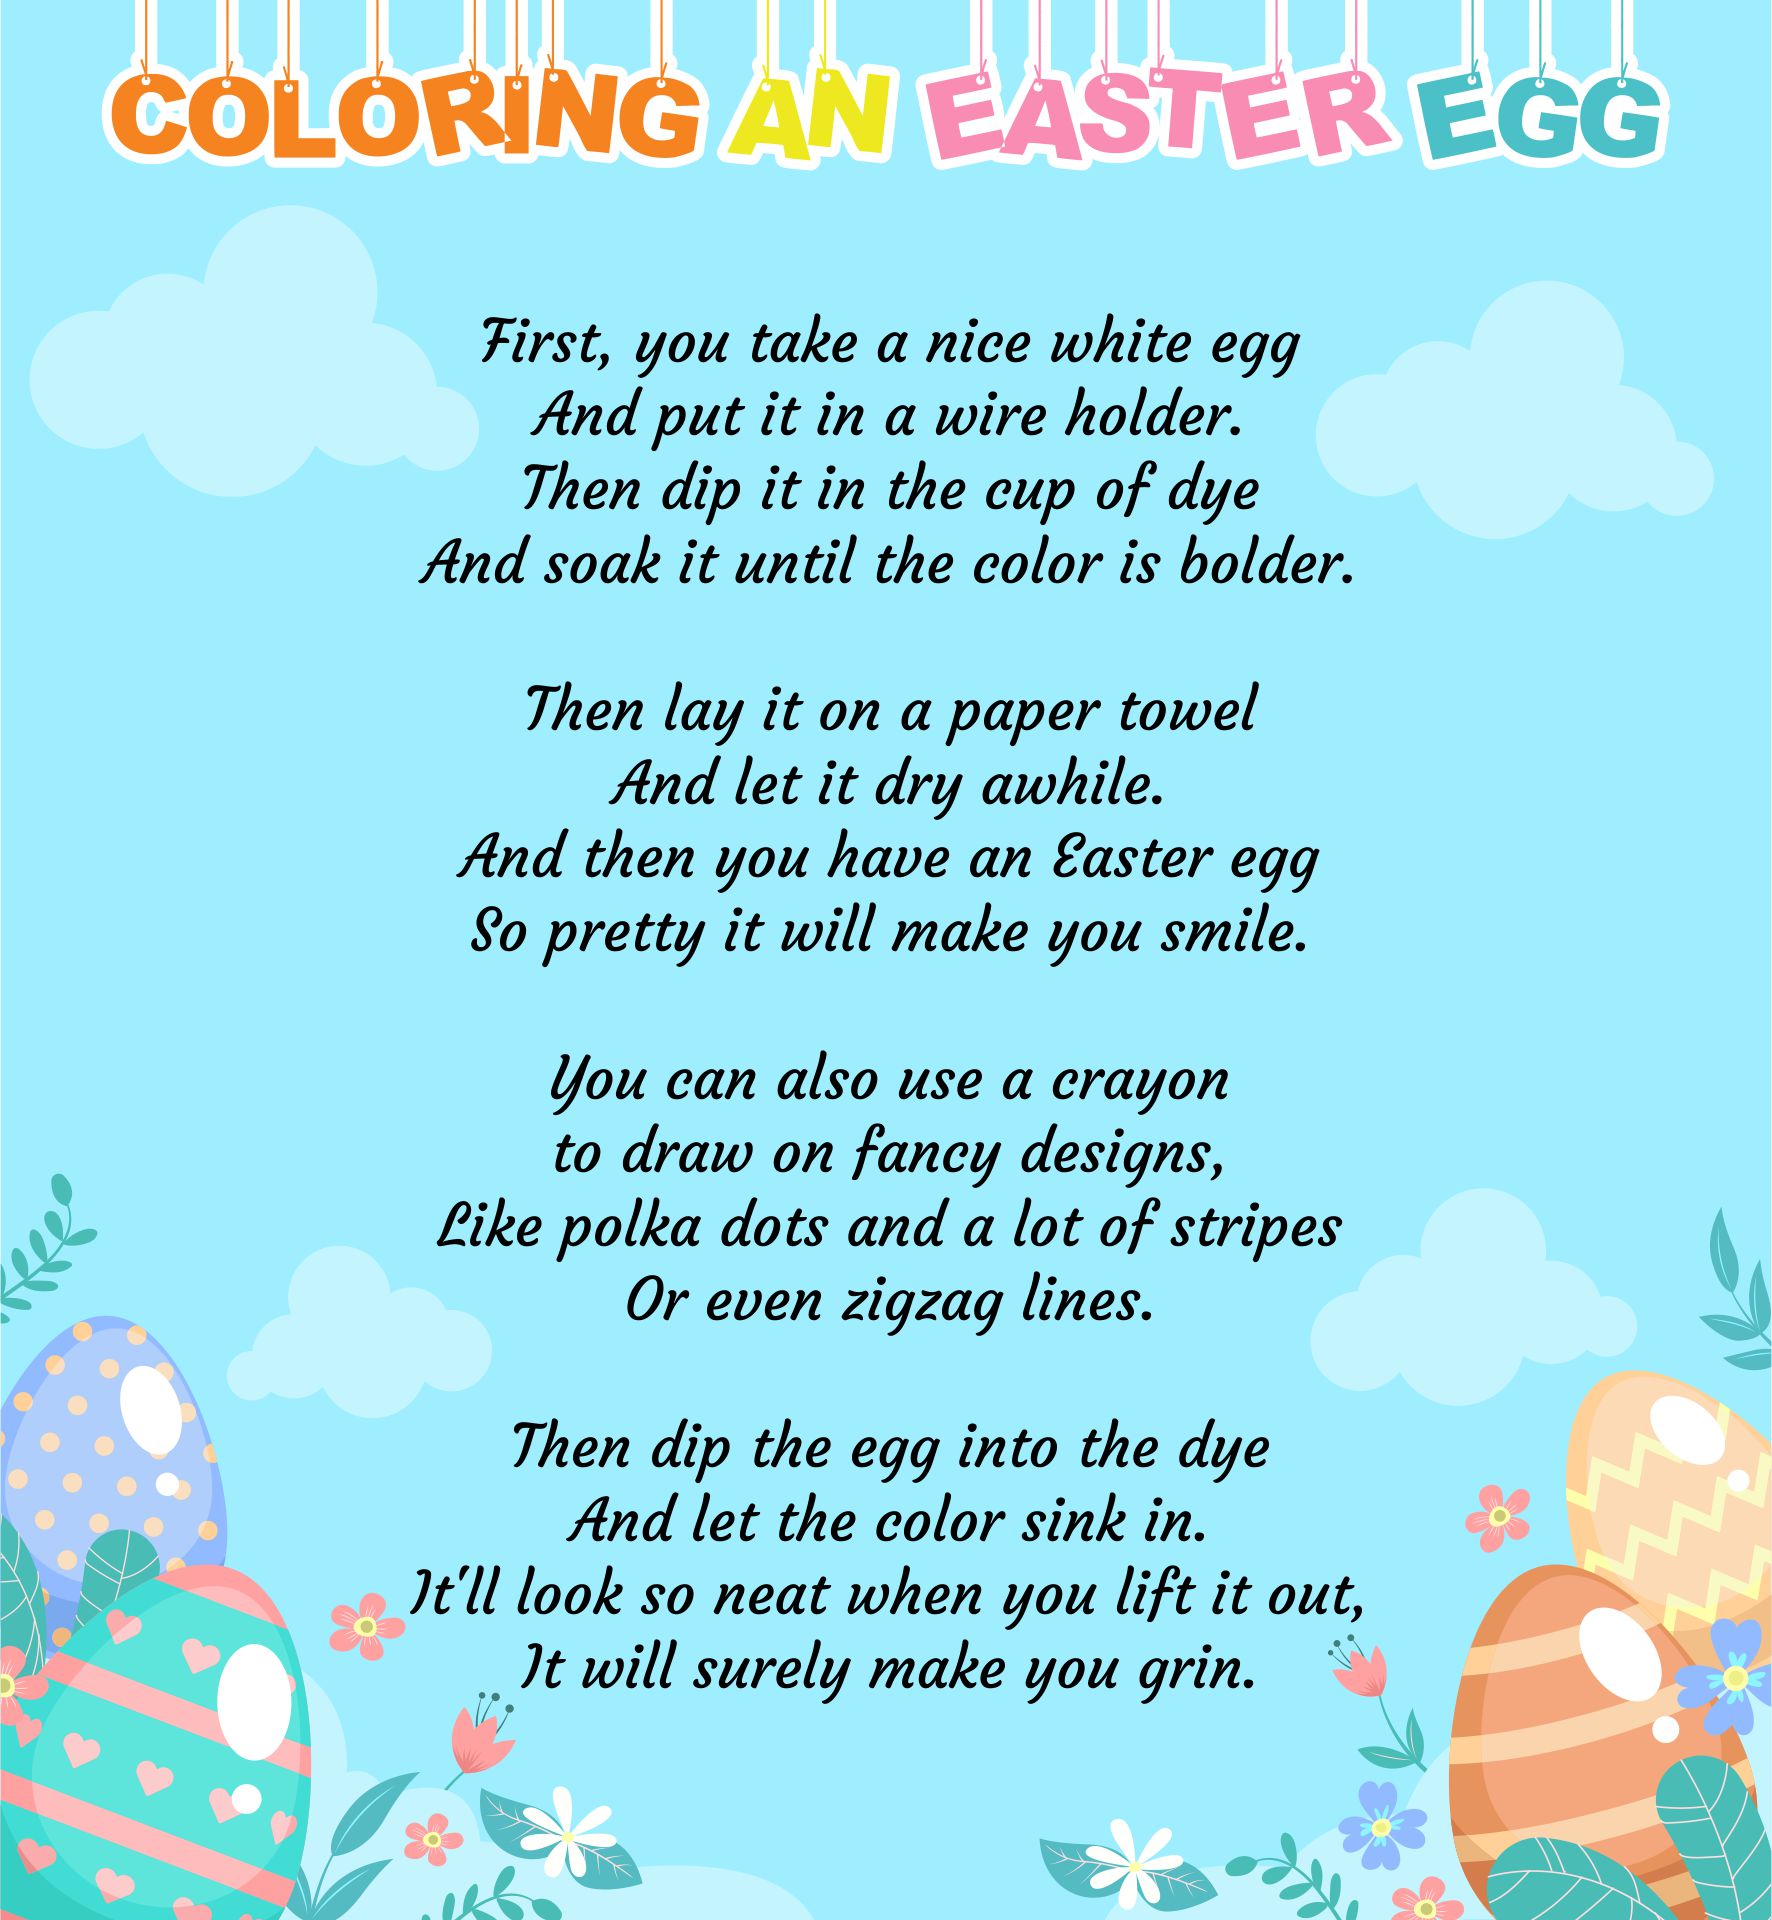 Printable Easter Poems